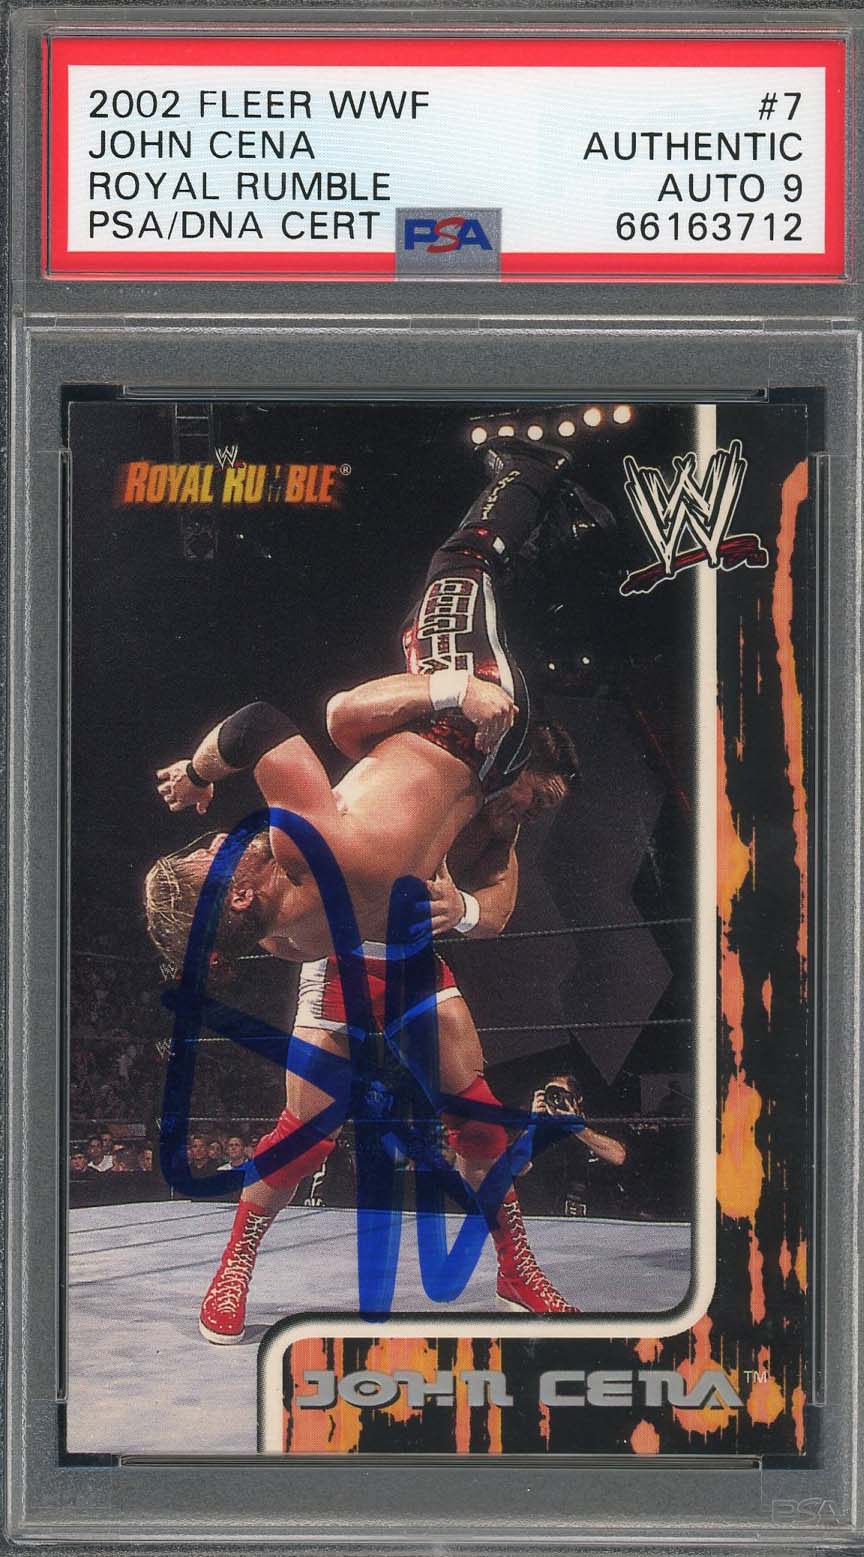 John Cena Autographed 2002 Fleer WWF Signed Rookie Card #7 Auto Graded PSA 9-Powers Sports Memorabilia